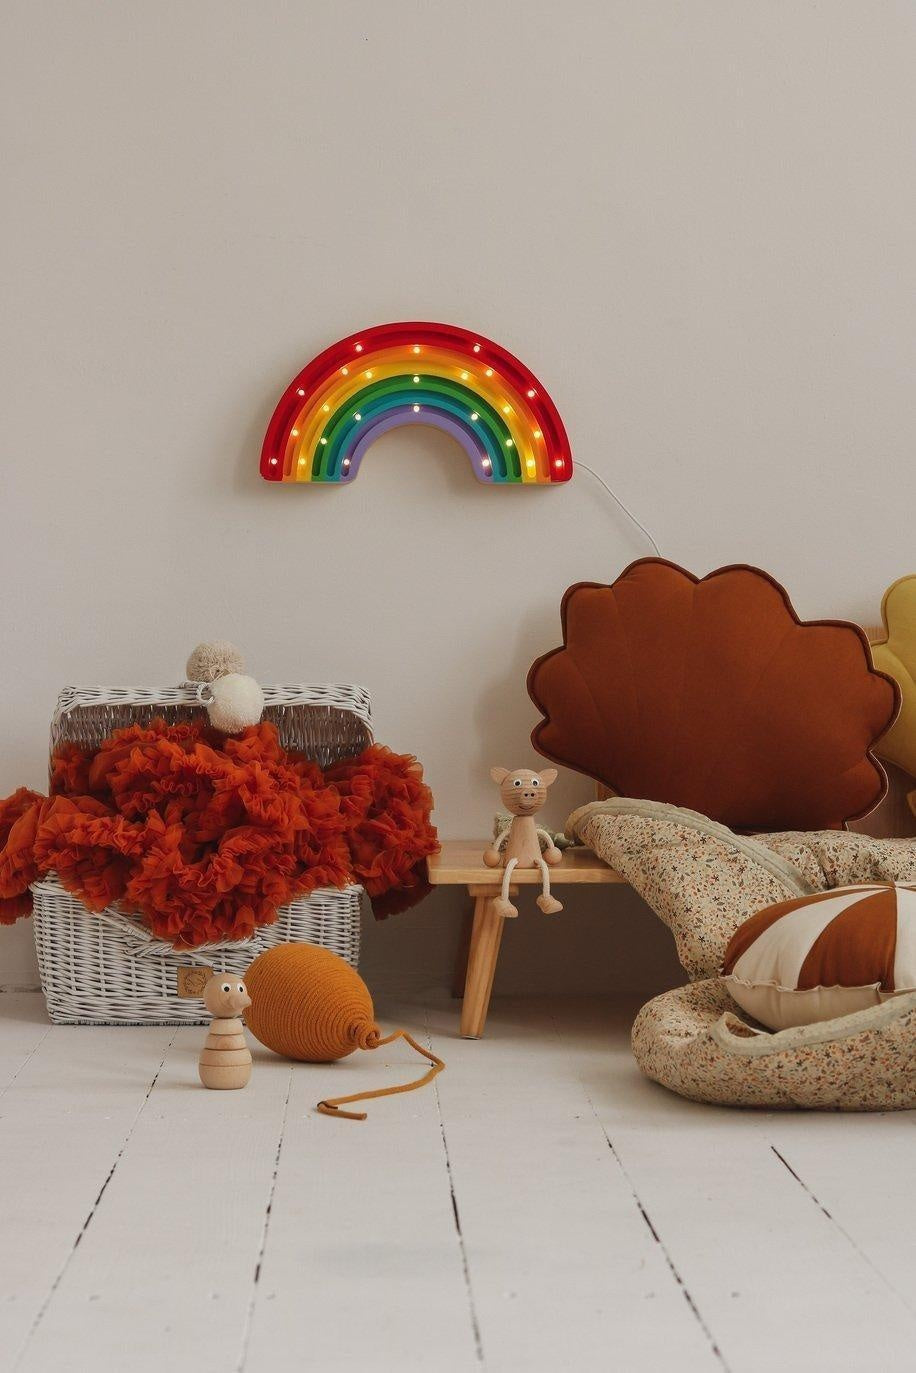 Shell Pillow Linen “Caramel” | Kids Room & Nursery Decor - Sumiye Co